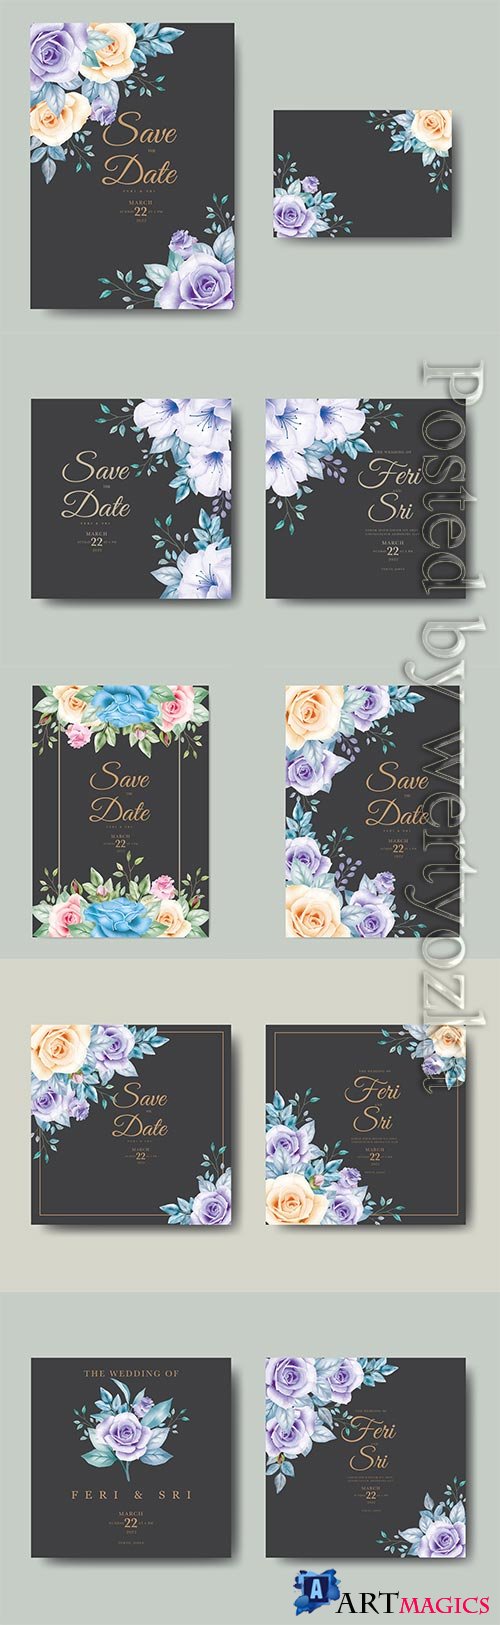 Wedding invitation card with floral watercolor vector design